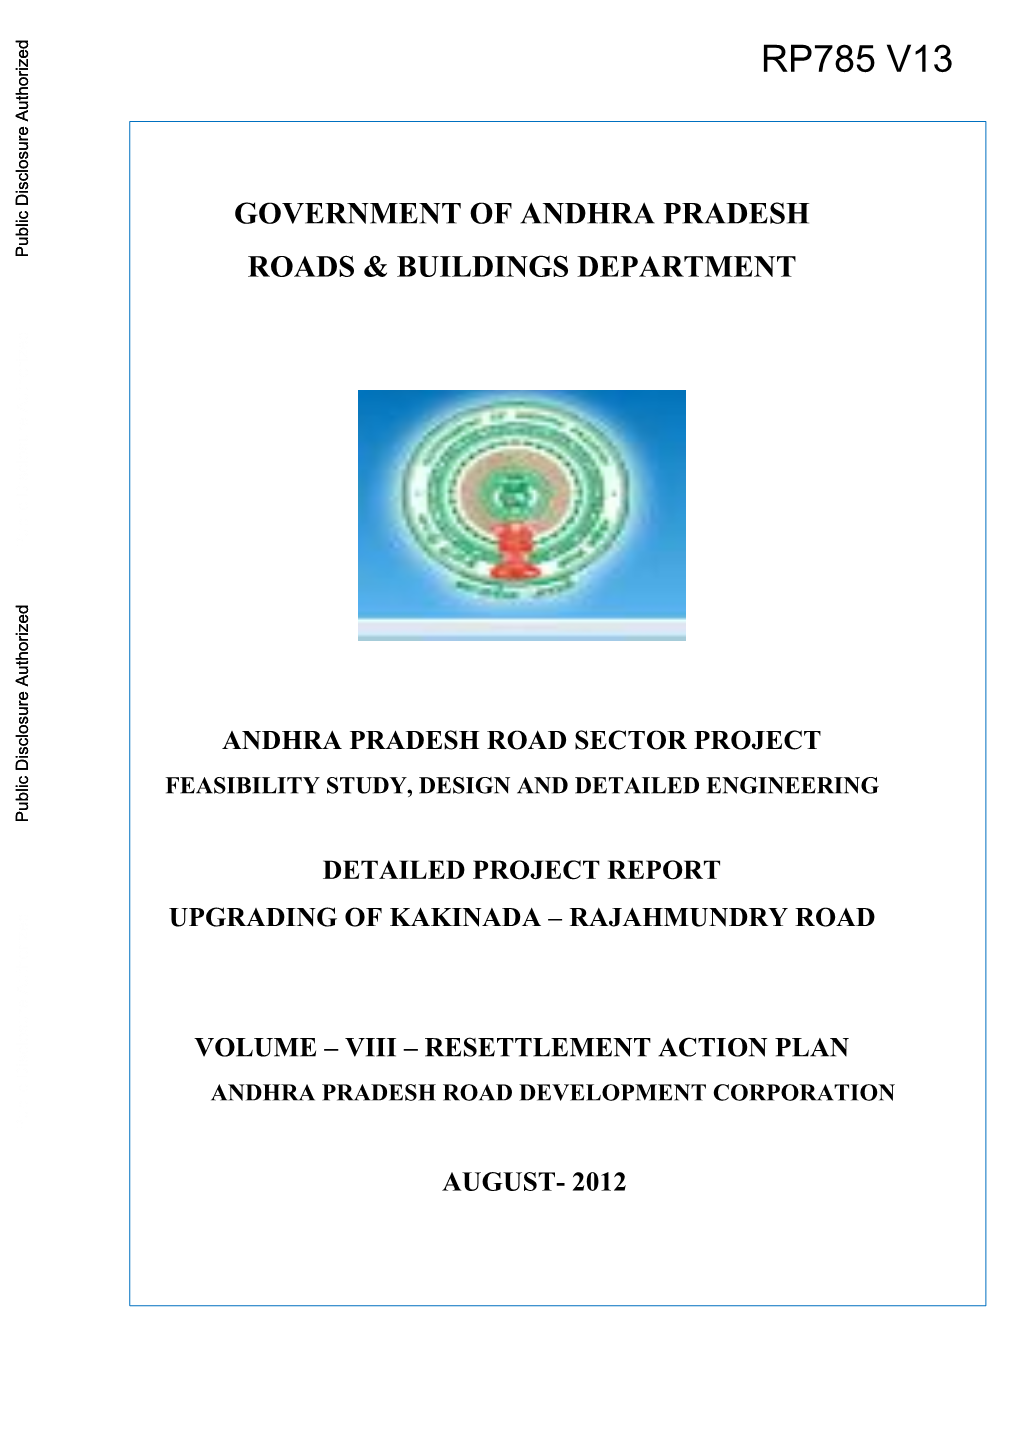 Resettlement Action Plan Andhra Pradesh Road Development Corporation